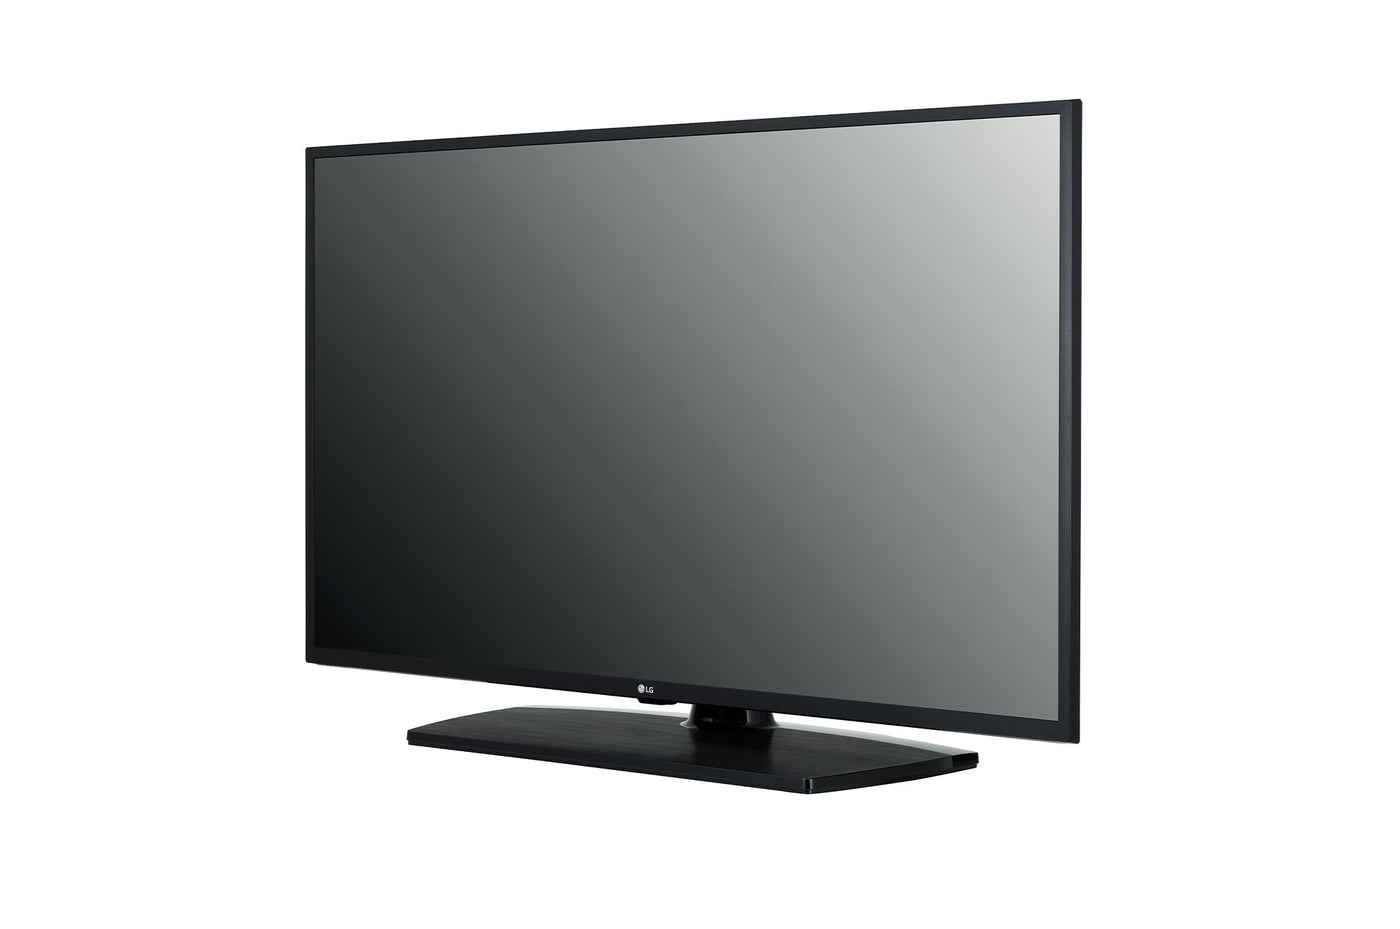 LG 43UM670H9 43" Pro:Centric Smart Hospitality 4K UHD TV with Slim Depth and Pro:Idiom Direct